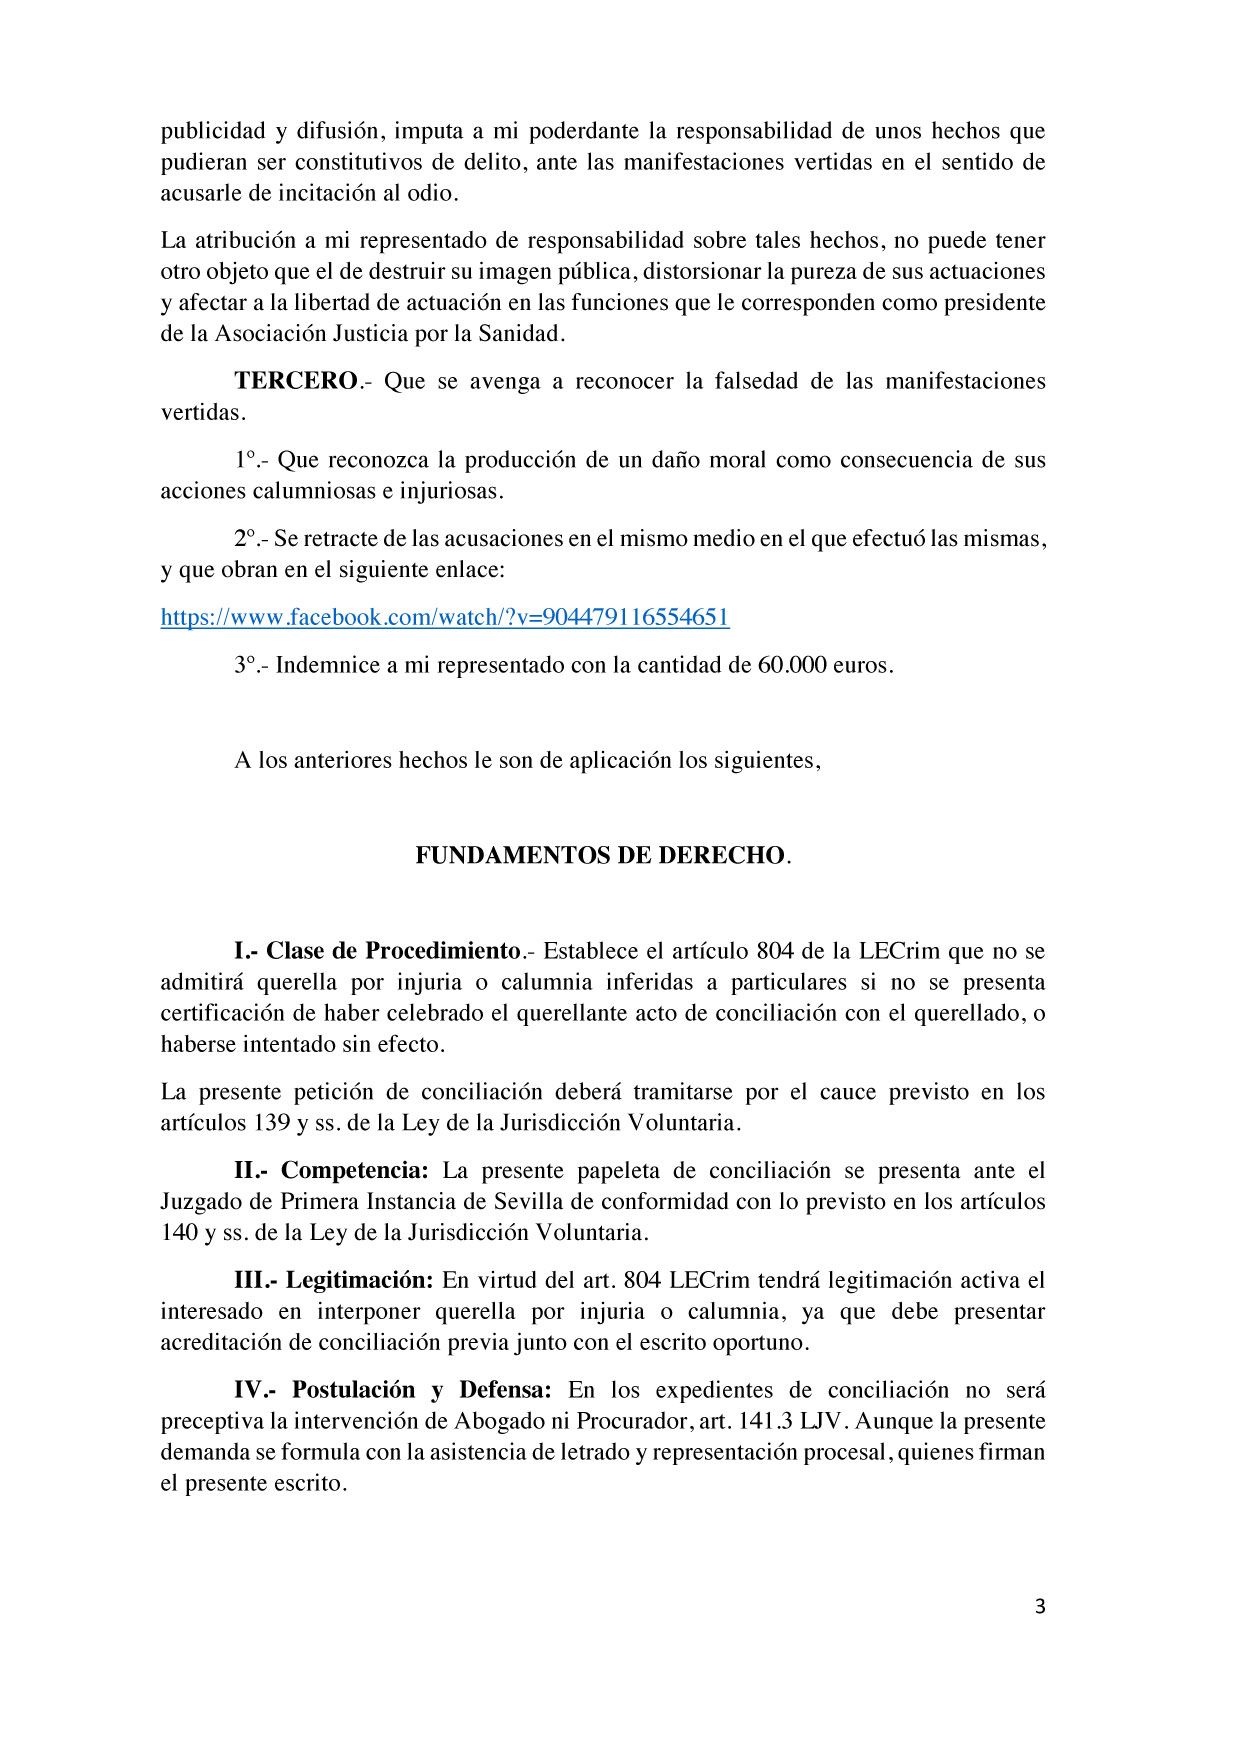 27/6/19-Conciliación previa a querella Susana Díaz - Asociación Justicia  por la Sanidad